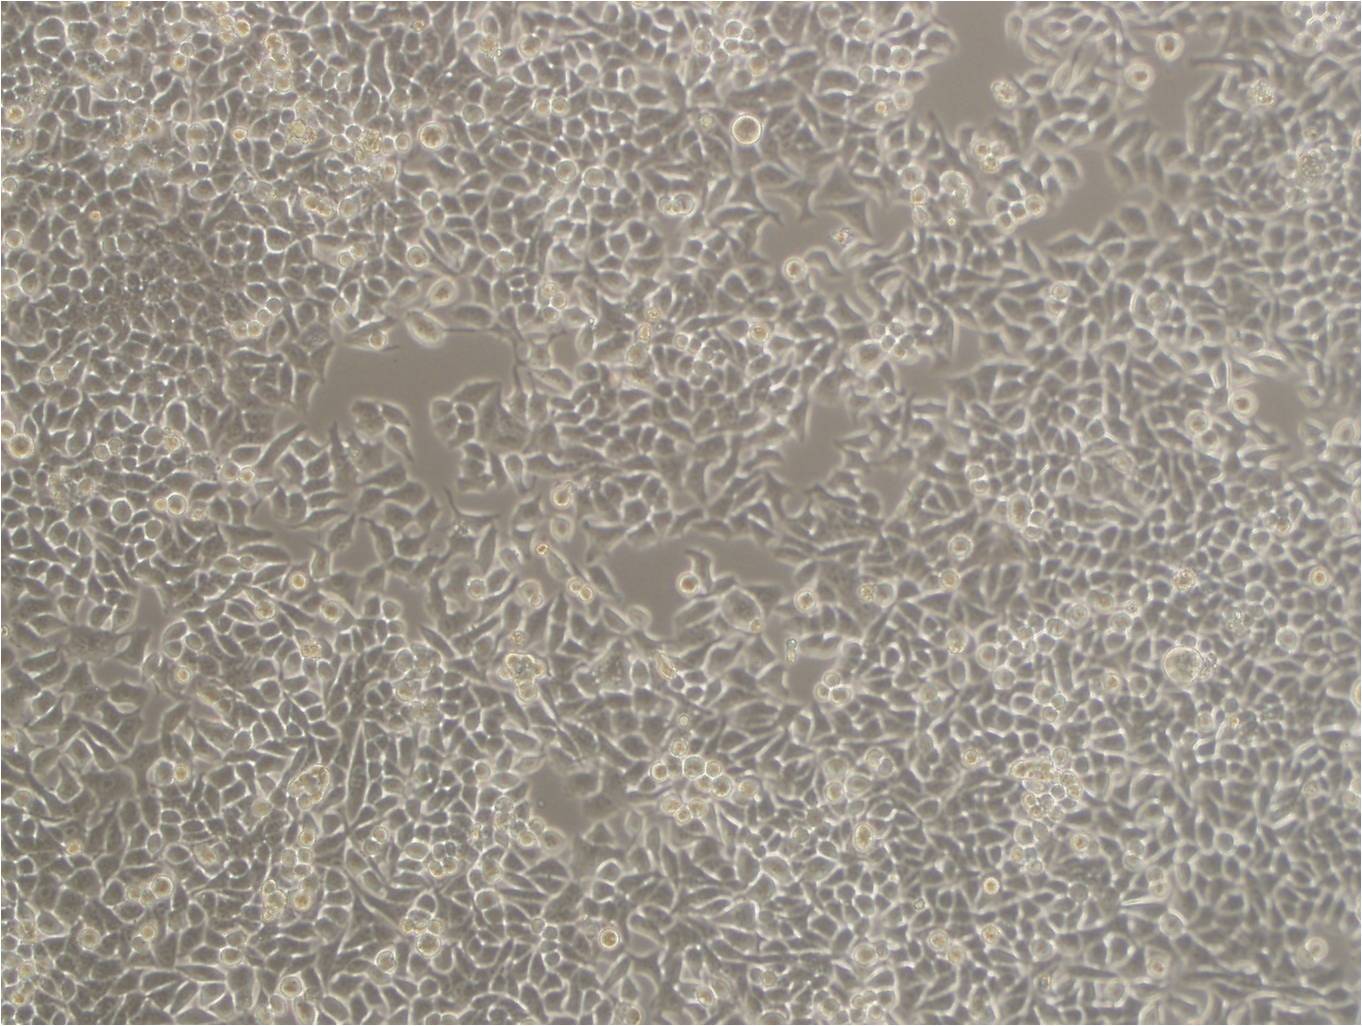 G-292 clone A141B1 epithelioid cells人骨肉瘤细胞系